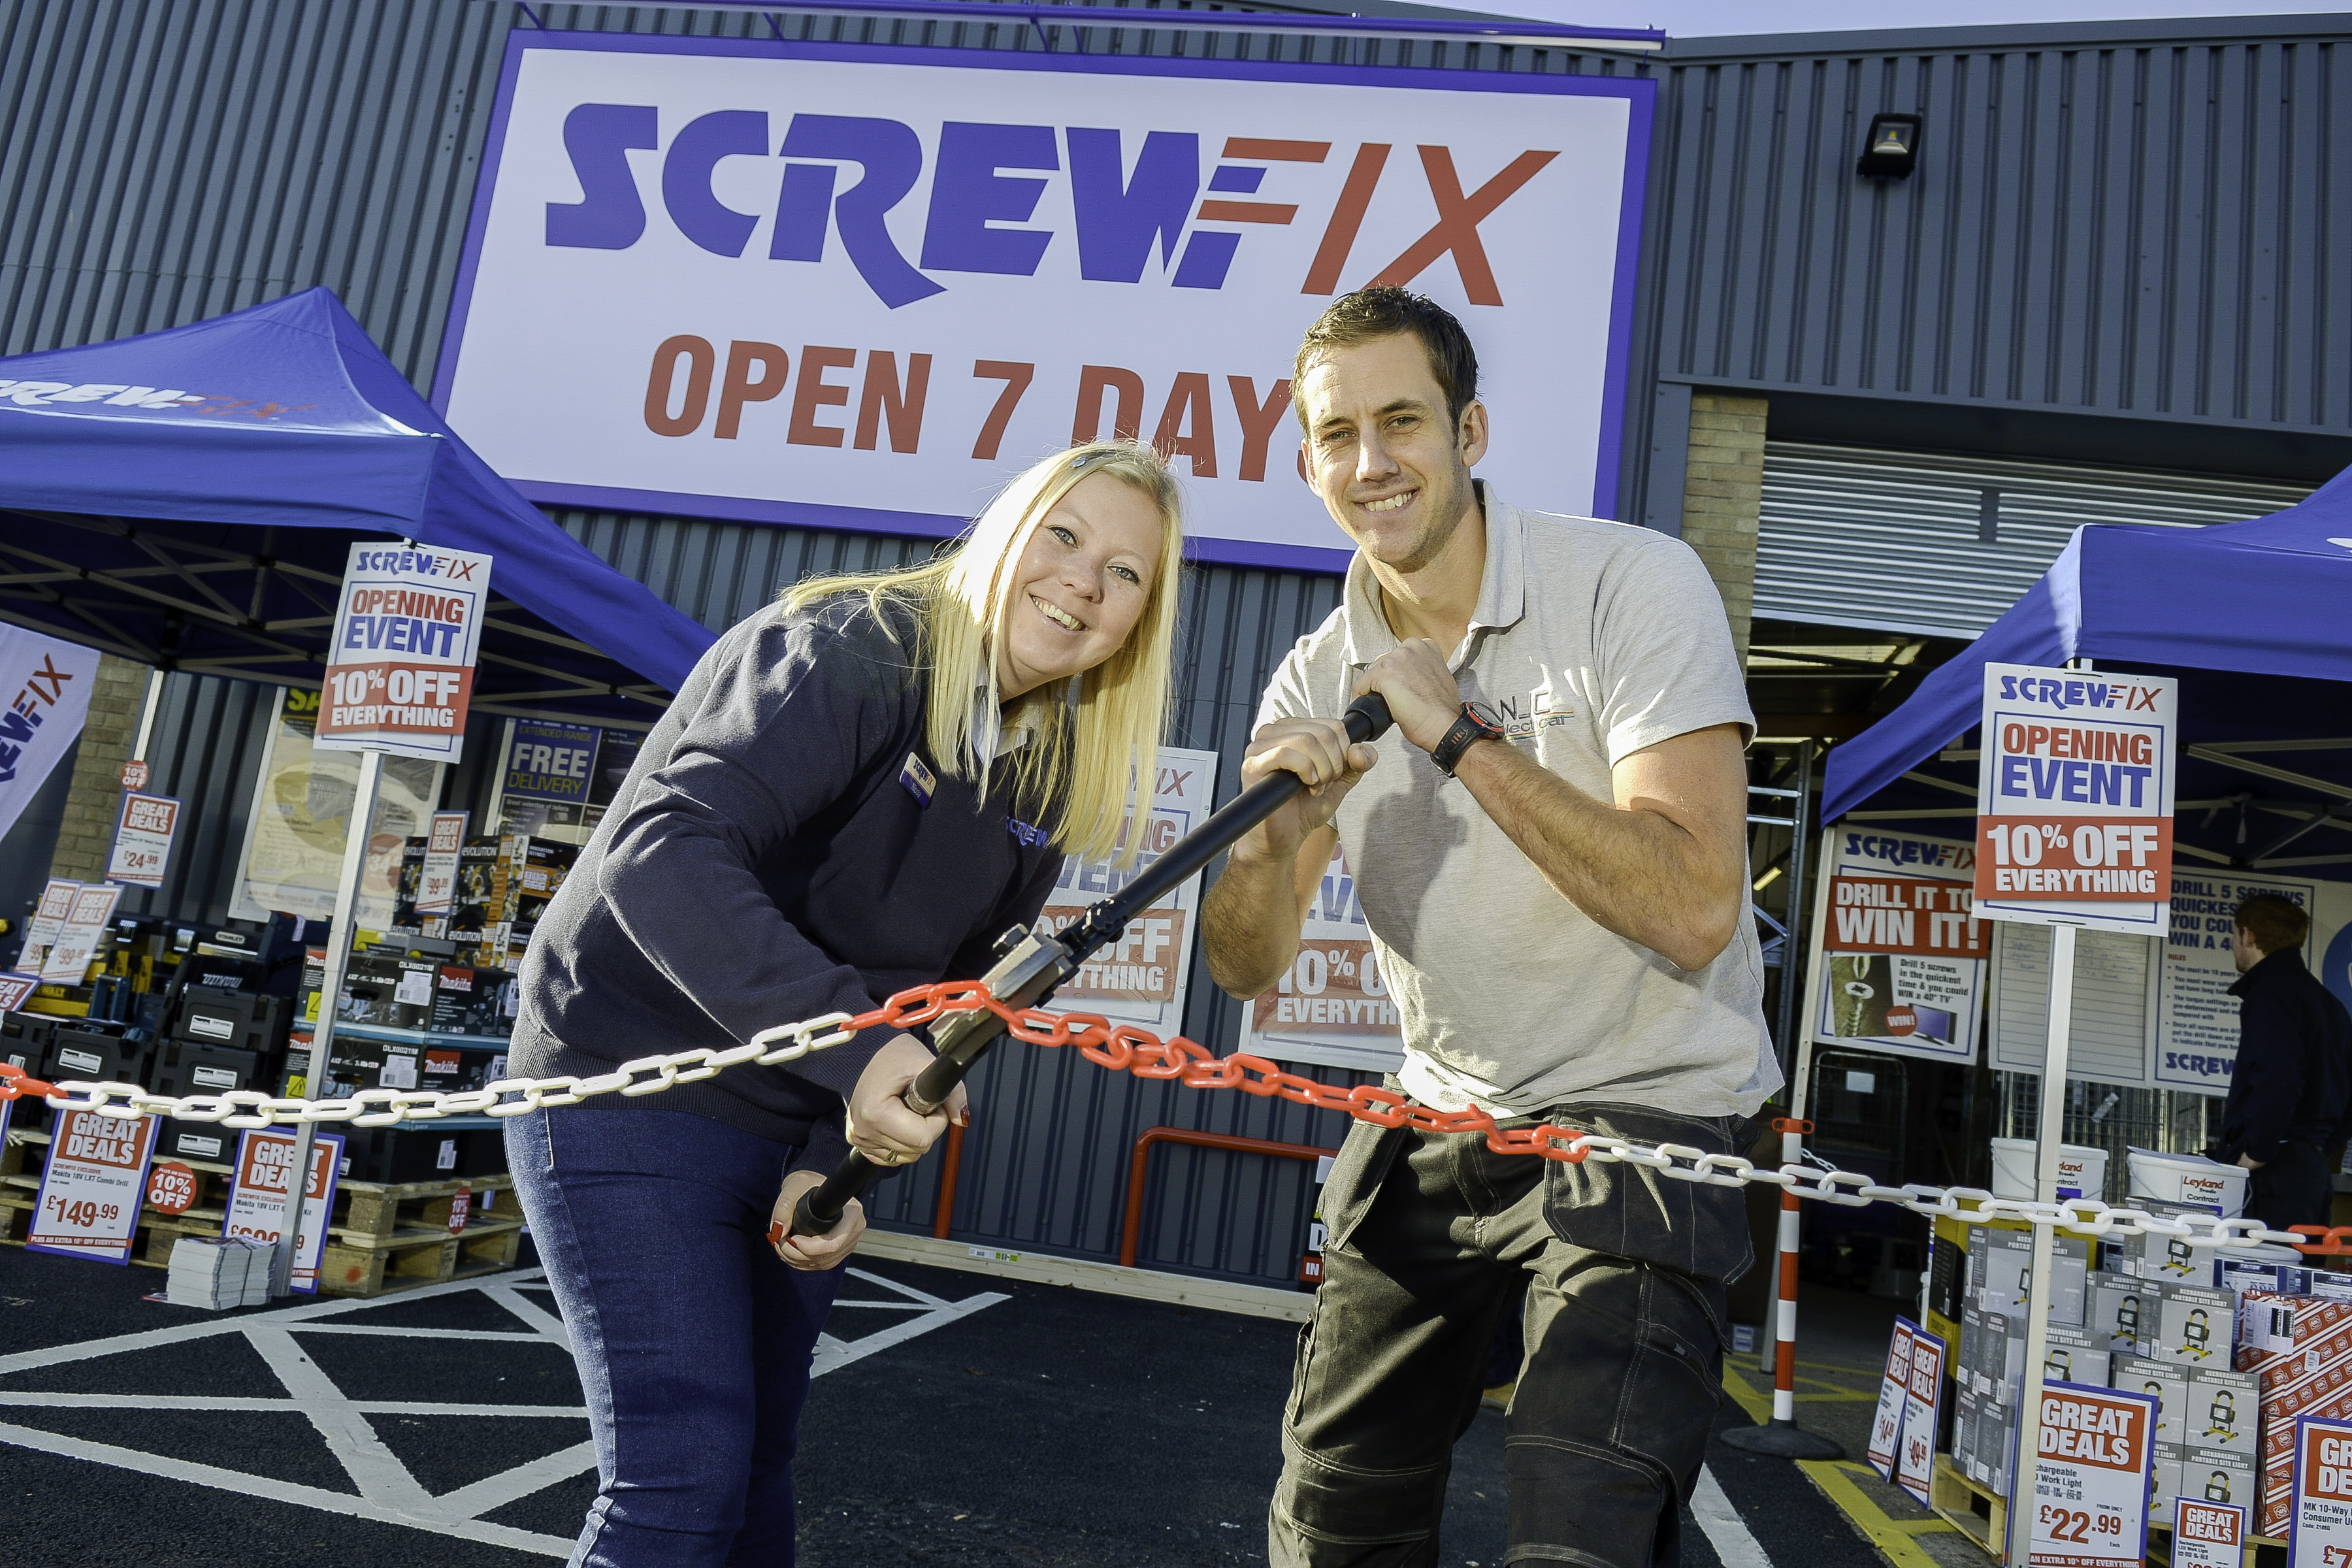 Ipswich’s second Screwfix store is declared a runaway success